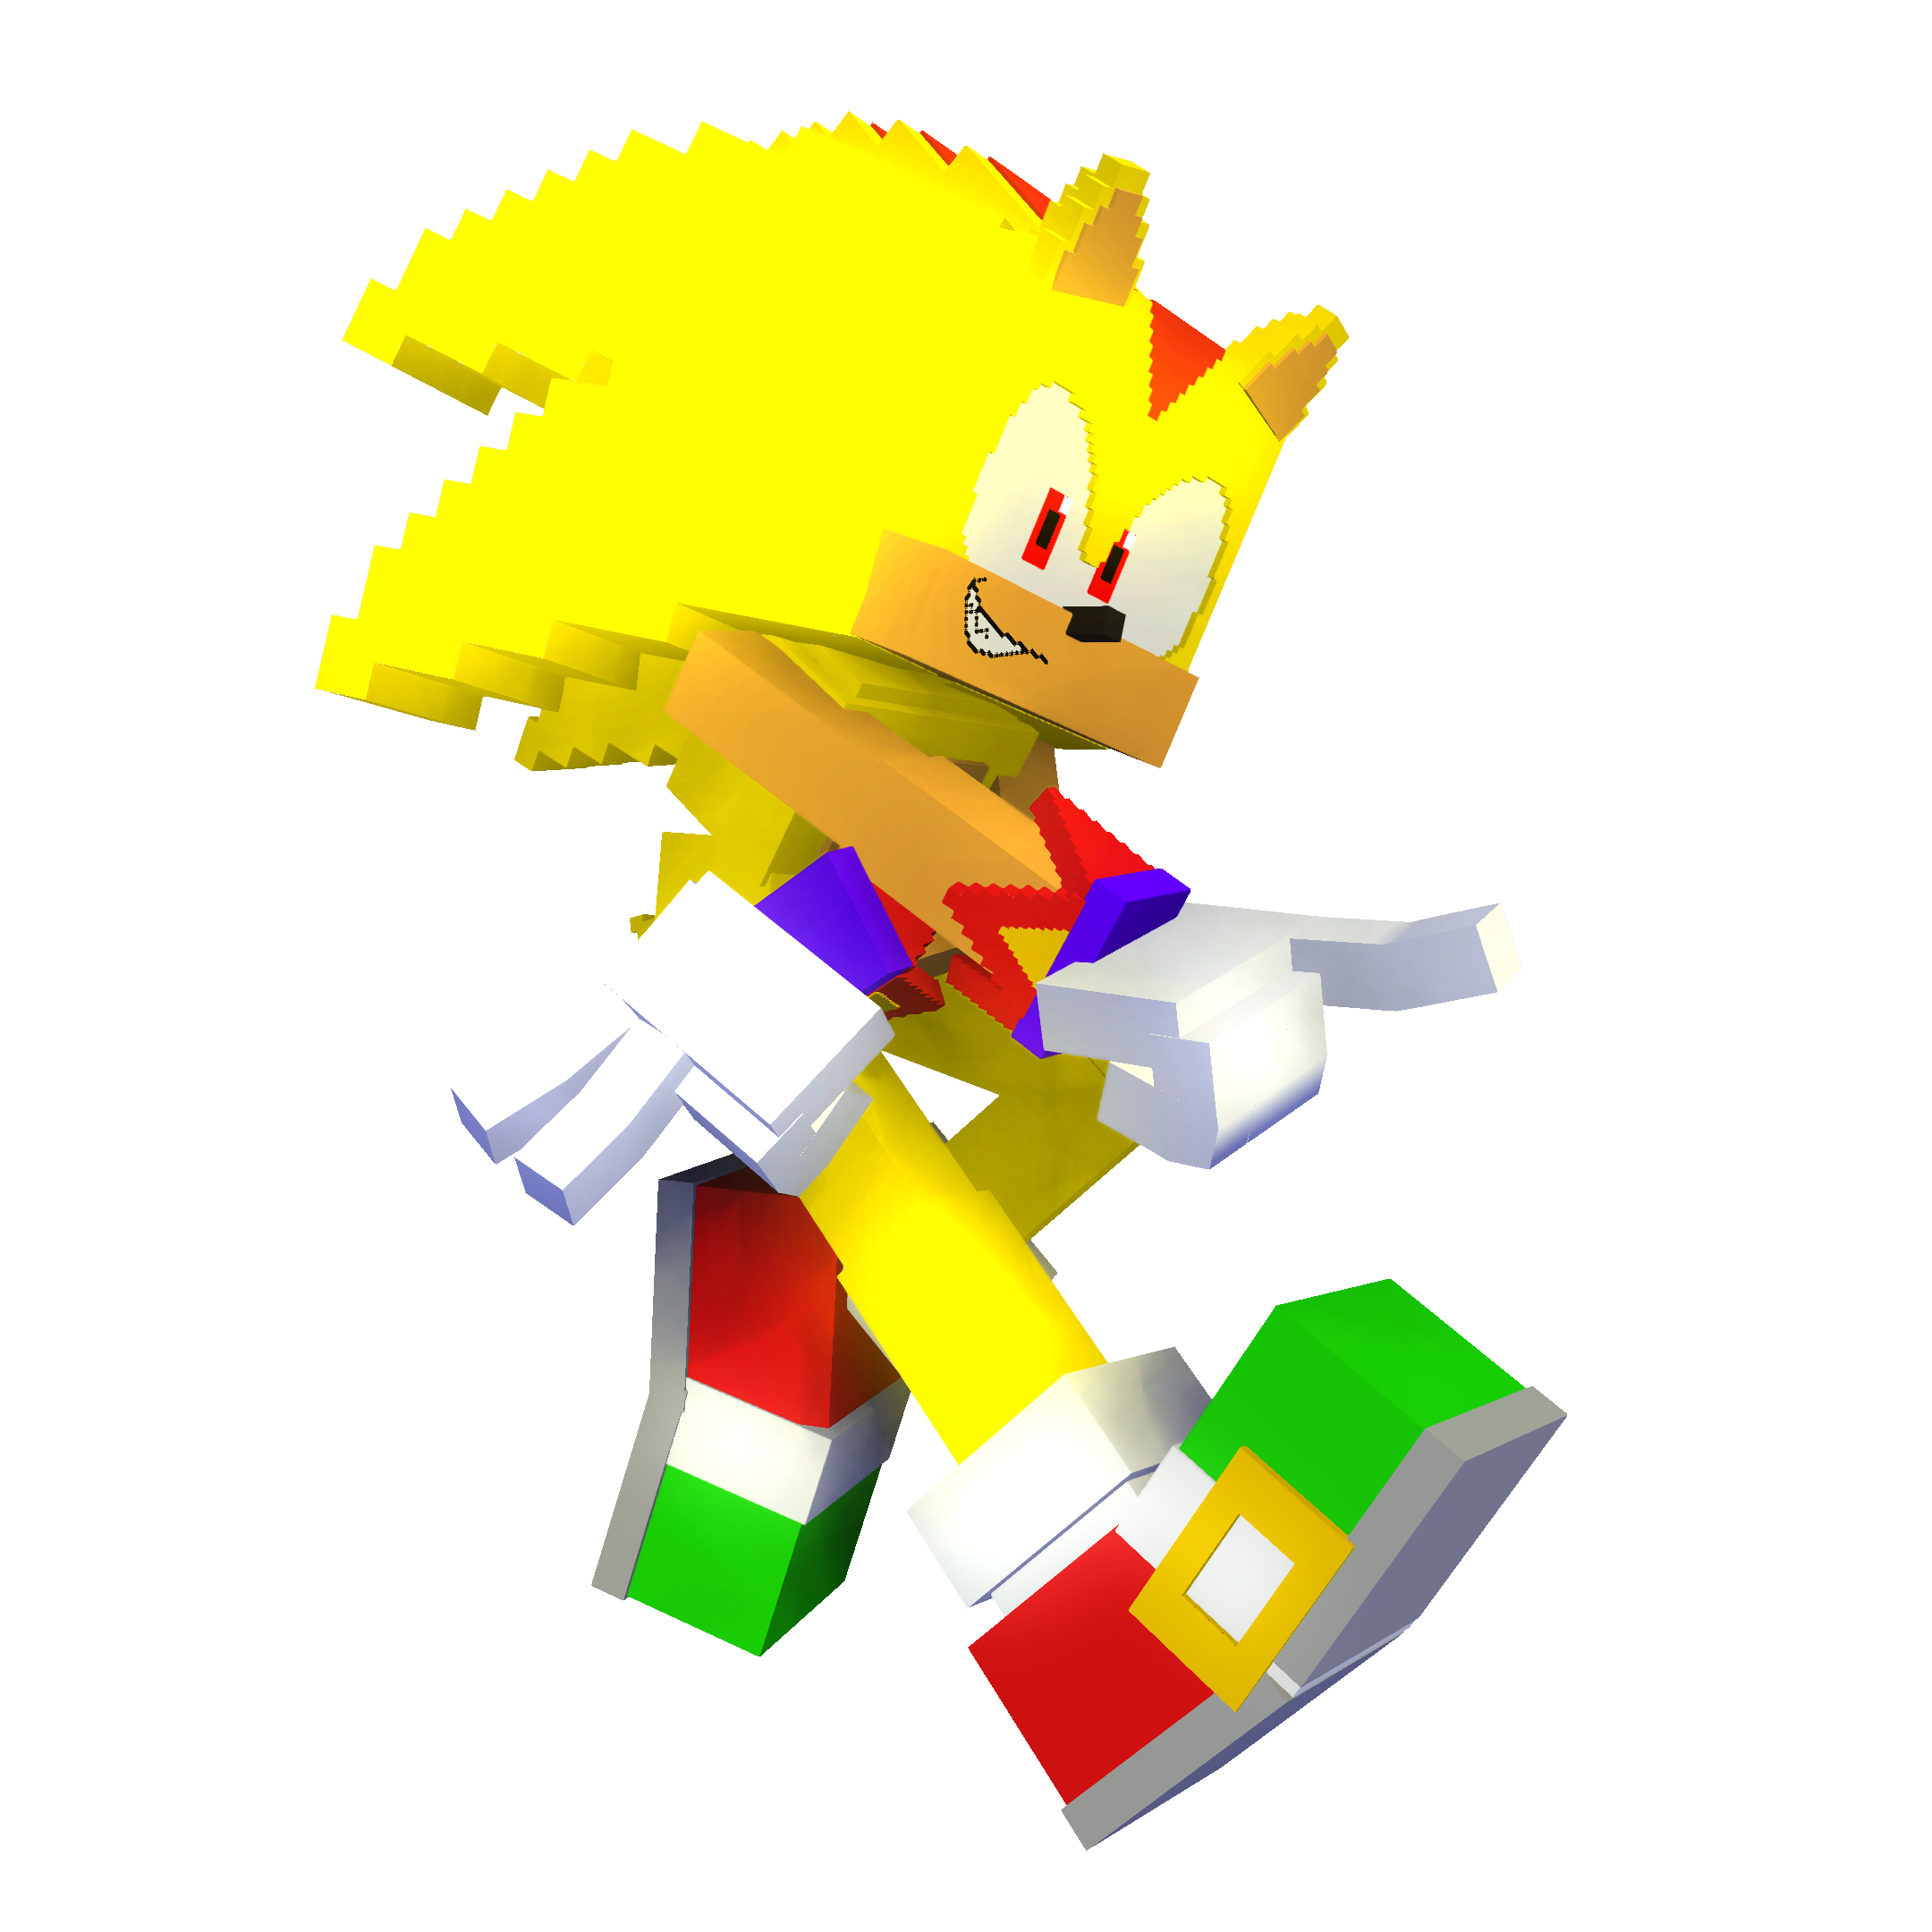 Super Sonic (Sonic Adventure) by Sonic-Konga on DeviantArt